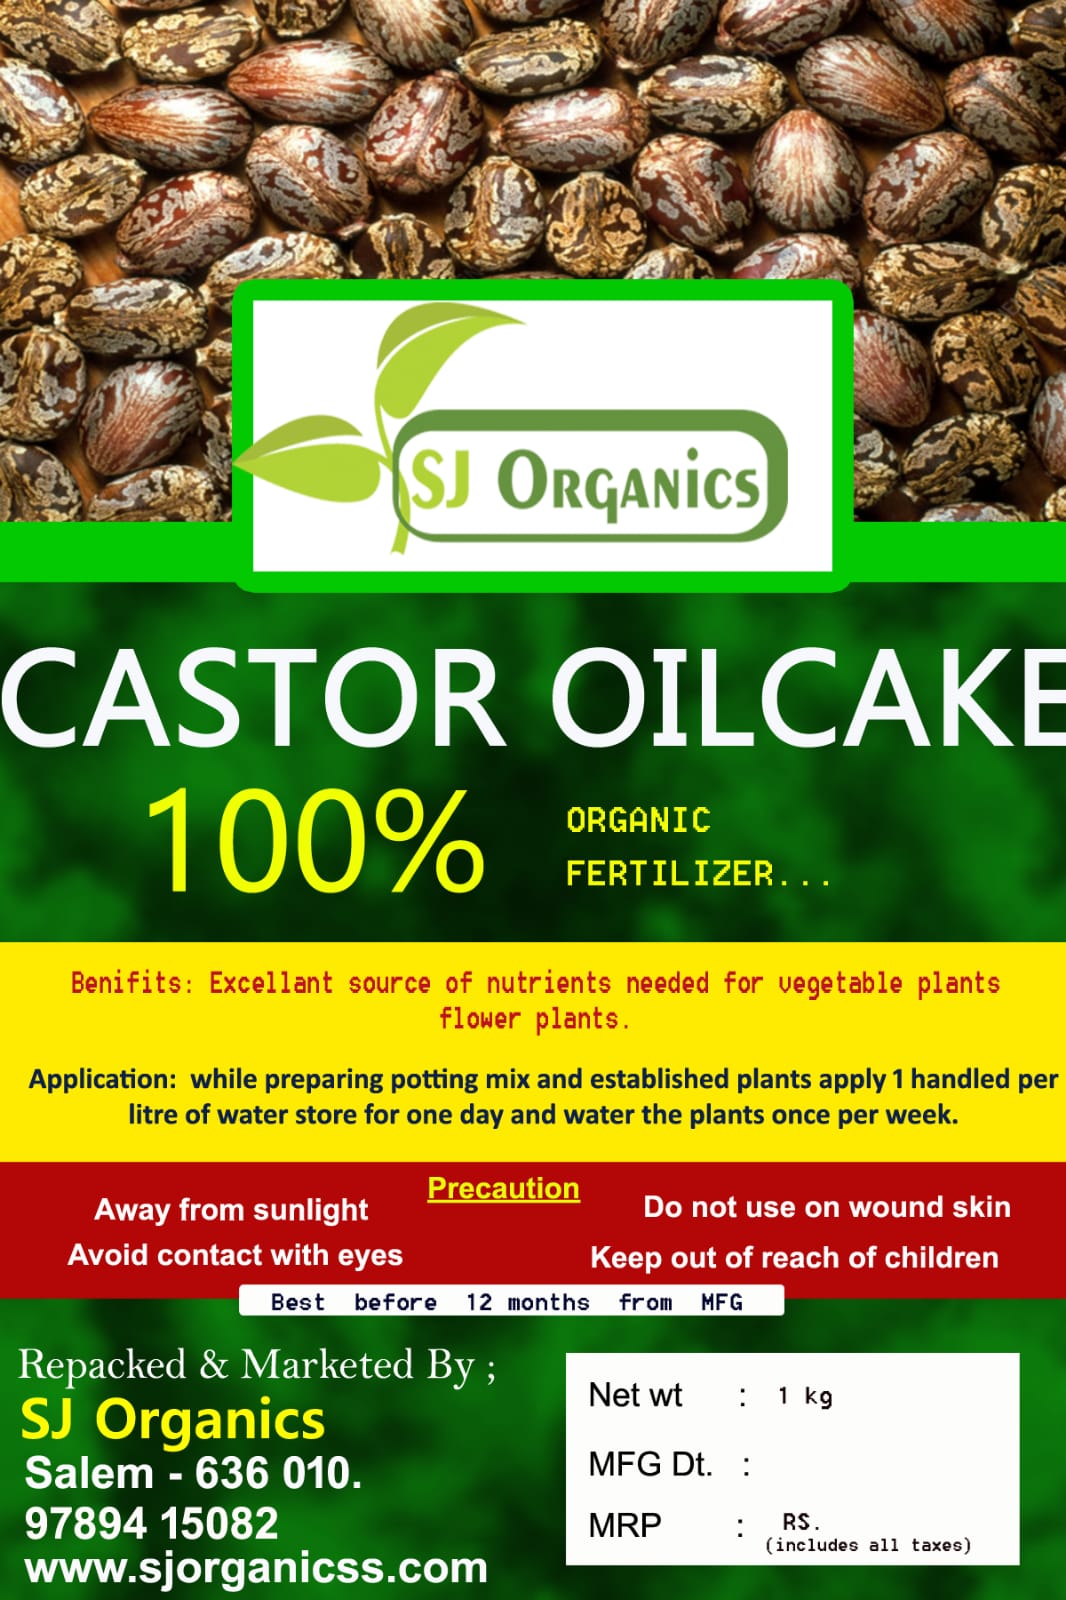 Rudra Castor Oil cake Powder soil manure (2.2 KG) Fertilizer Price in India  - Buy Rudra Castor Oil cake Powder soil manure (2.2 KG) Fertilizer online  at Flipkart.com